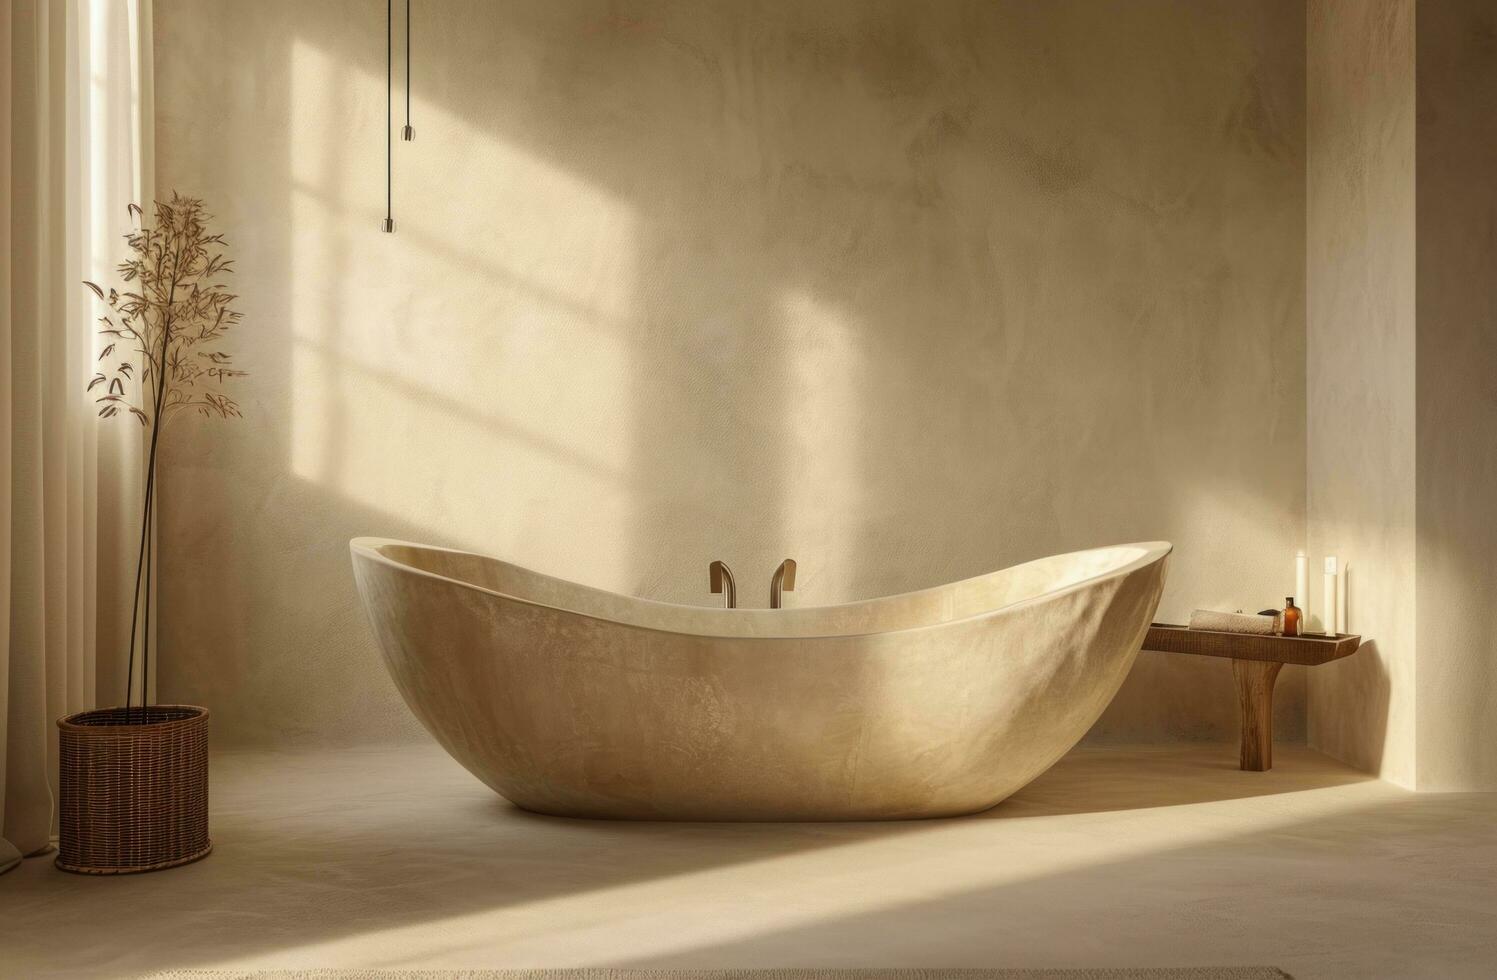 AI generated an image of a modern bathtub inside a bathroom photo